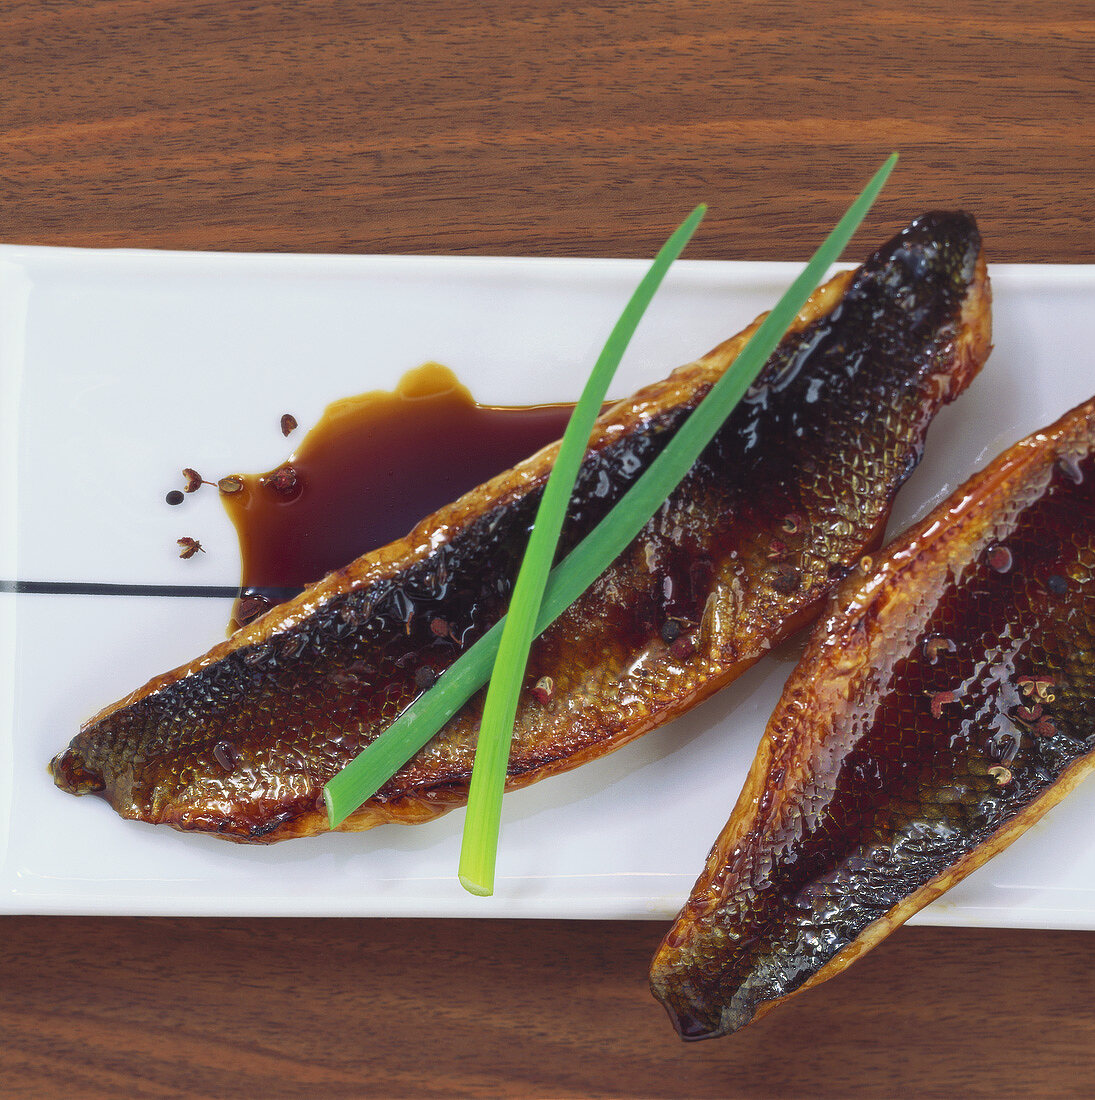 Grilled fish fillets in teriyaki marinade